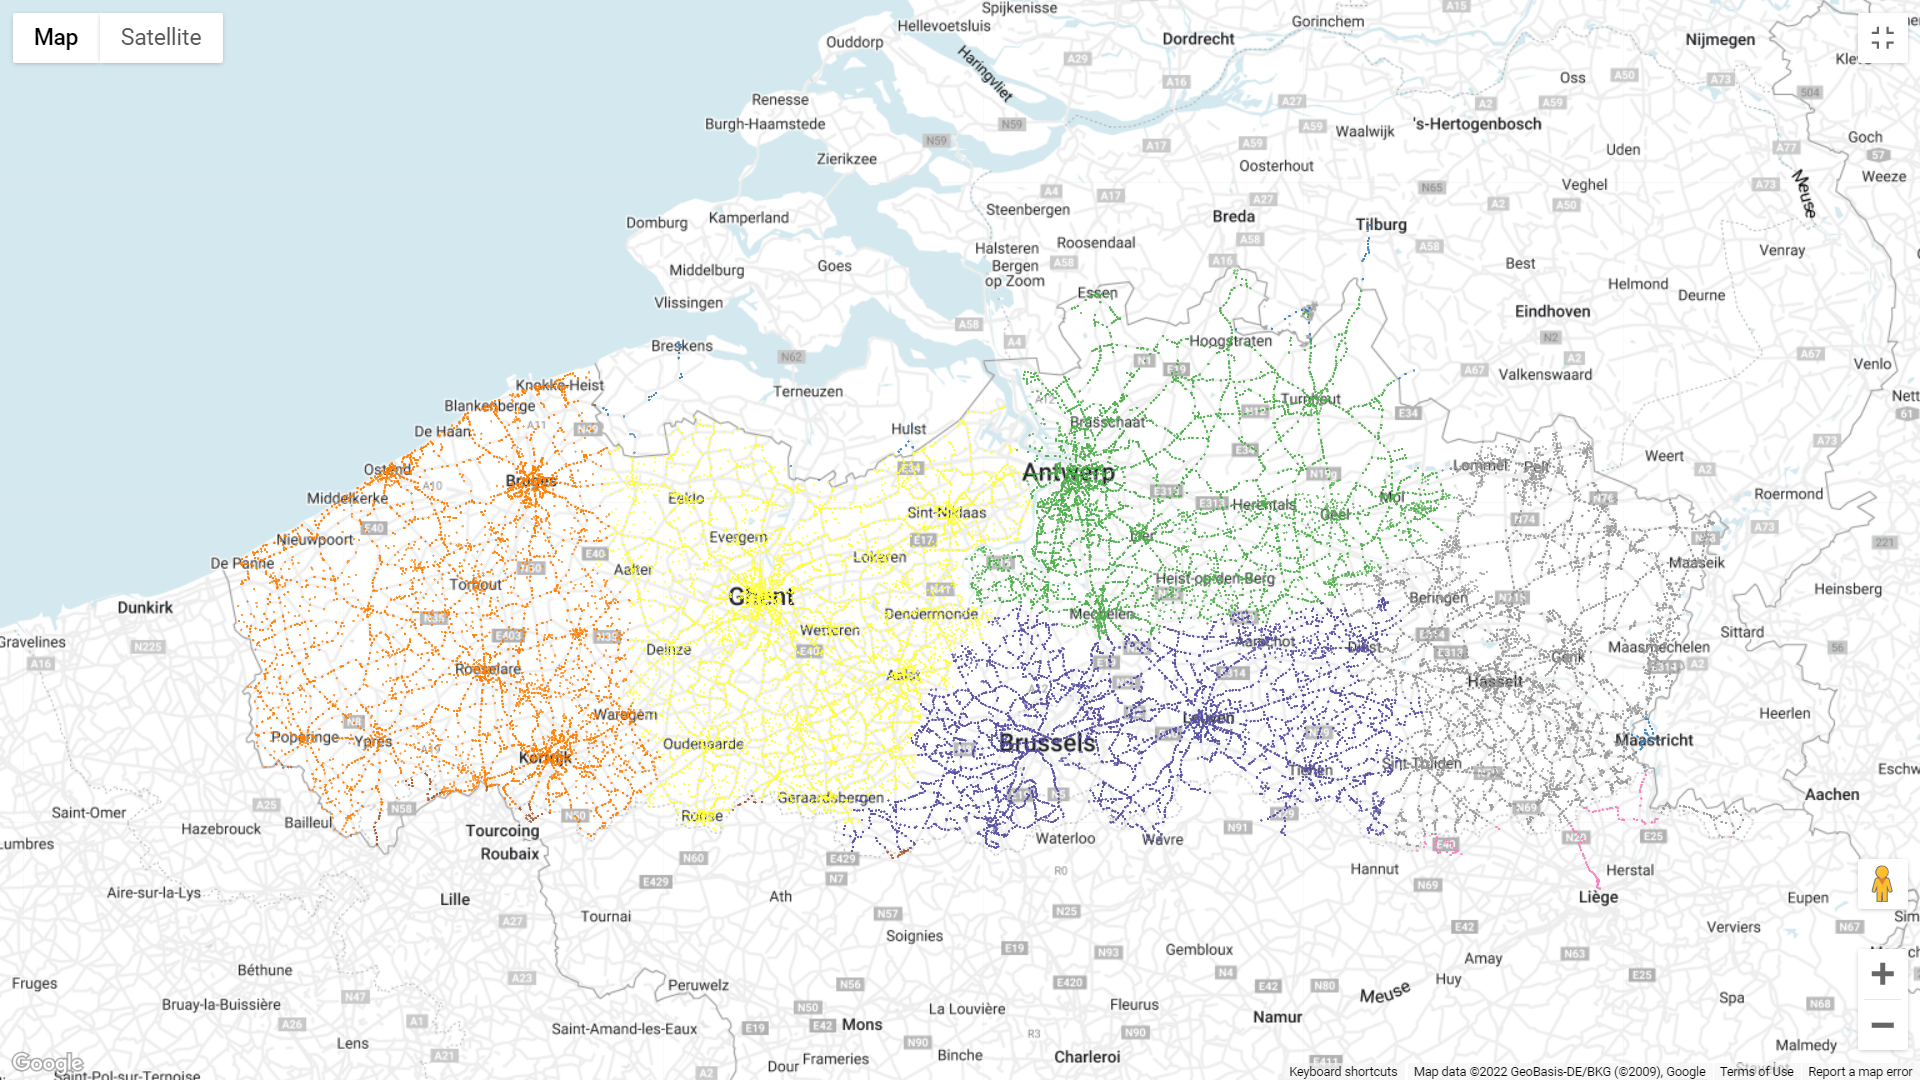 Easily visualize BigQuery data on Google Maps